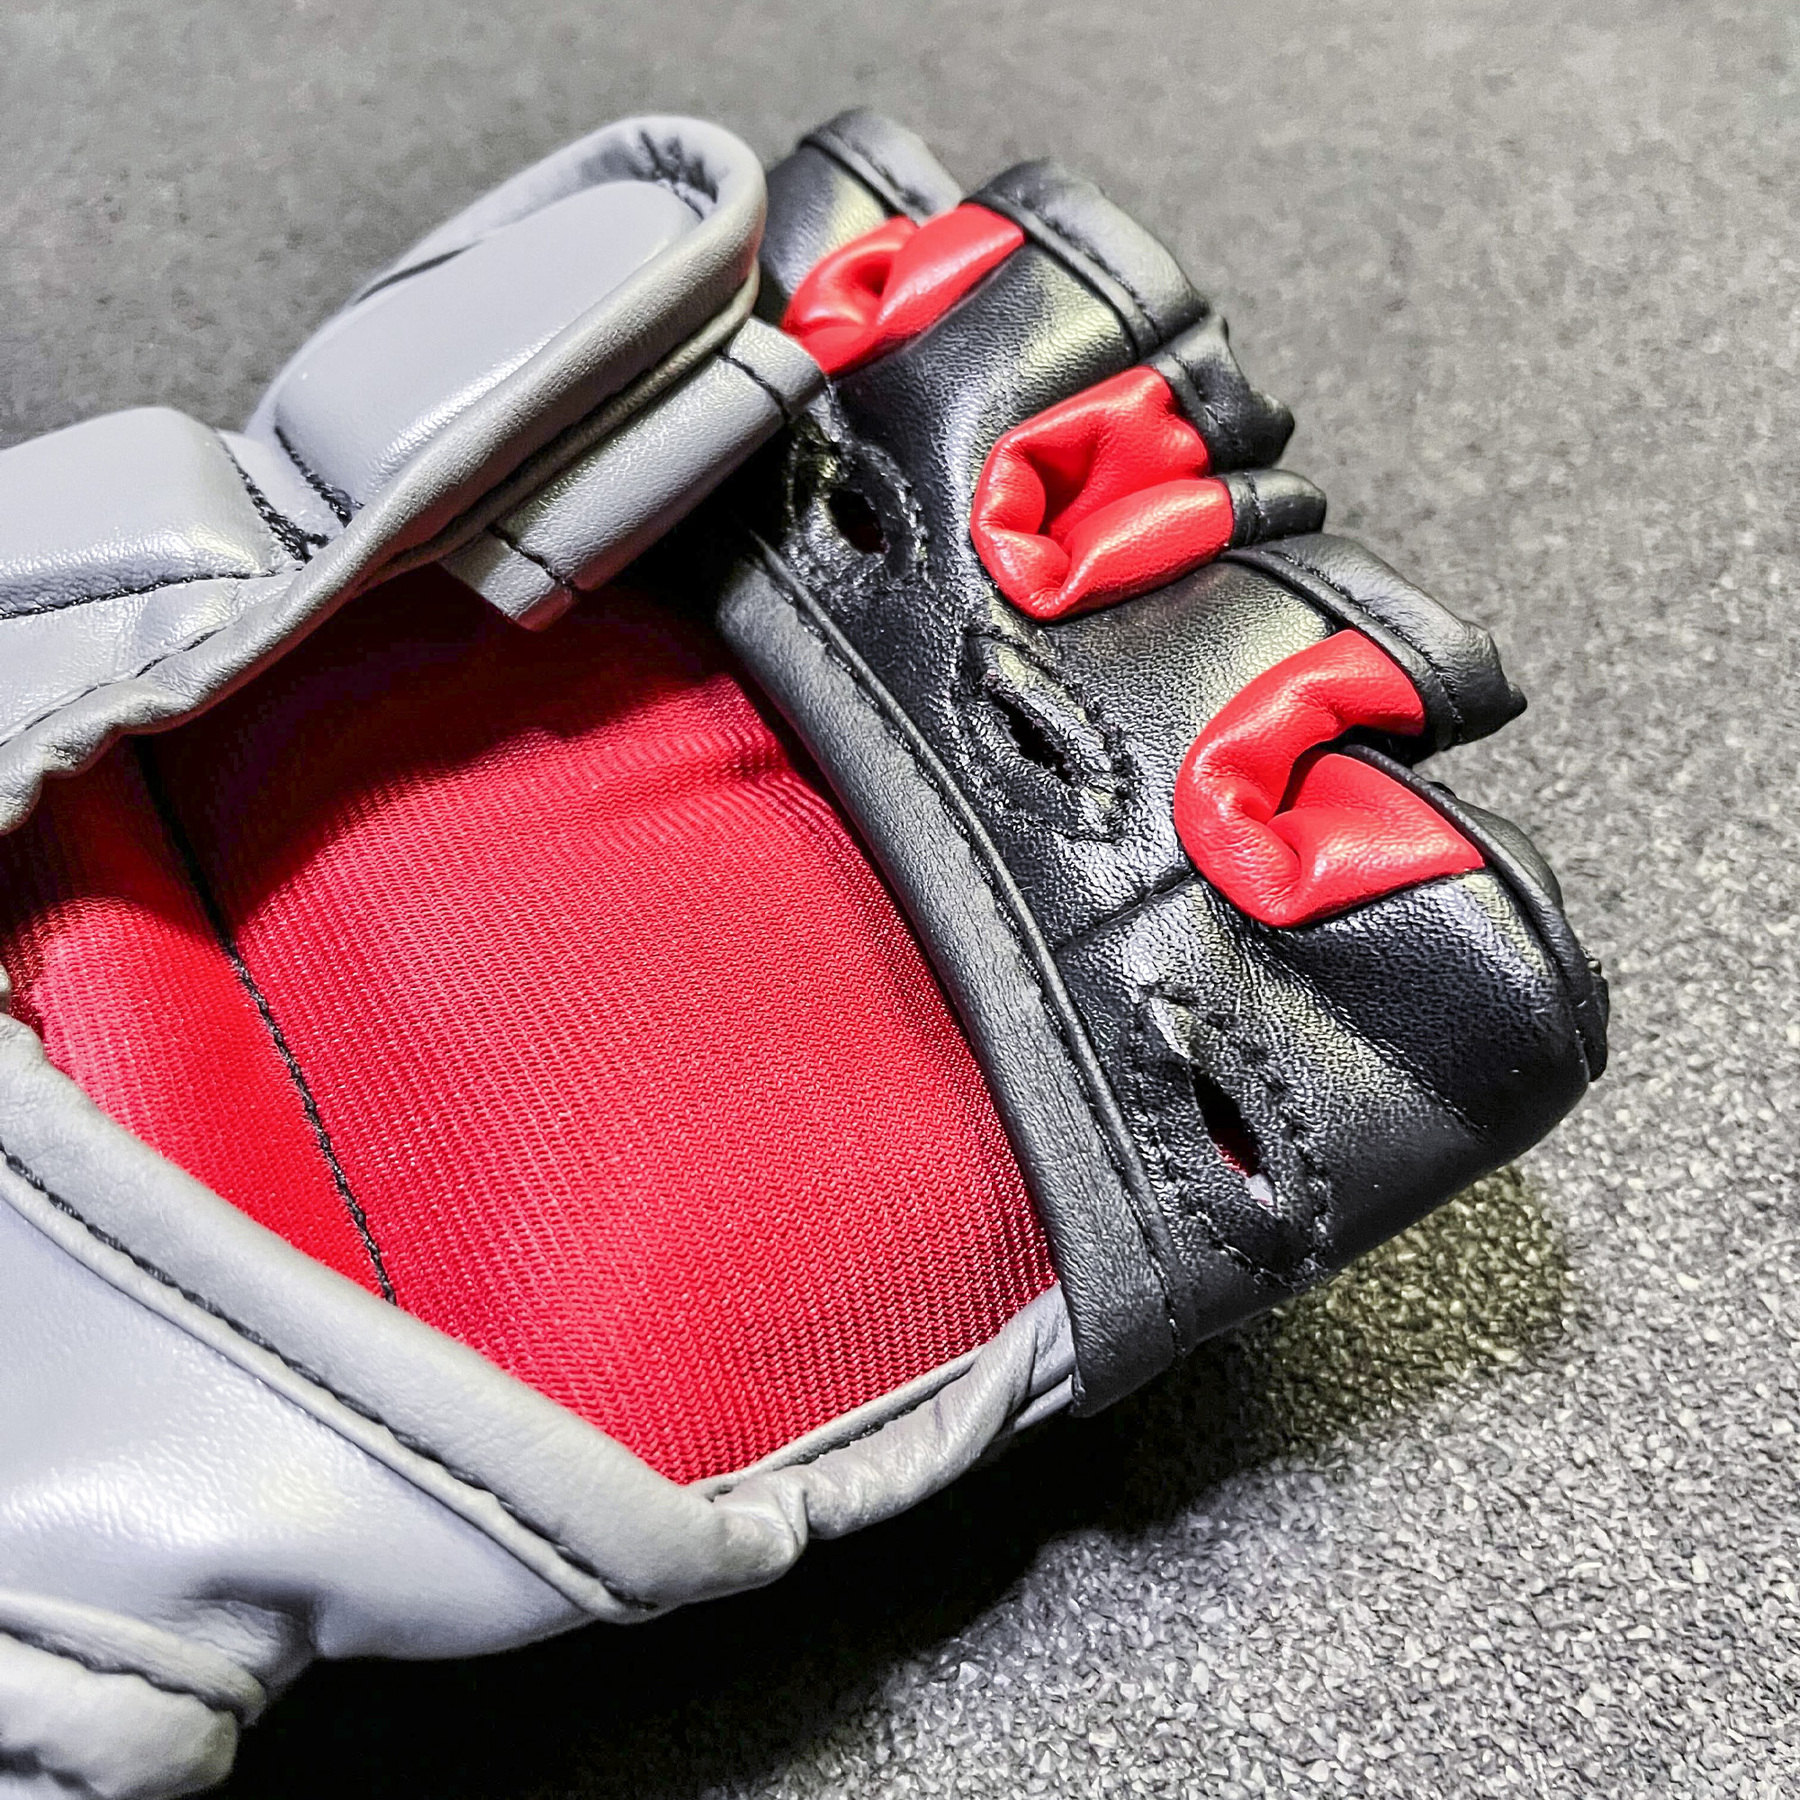 Everlast MMA Training Grappling Gloves